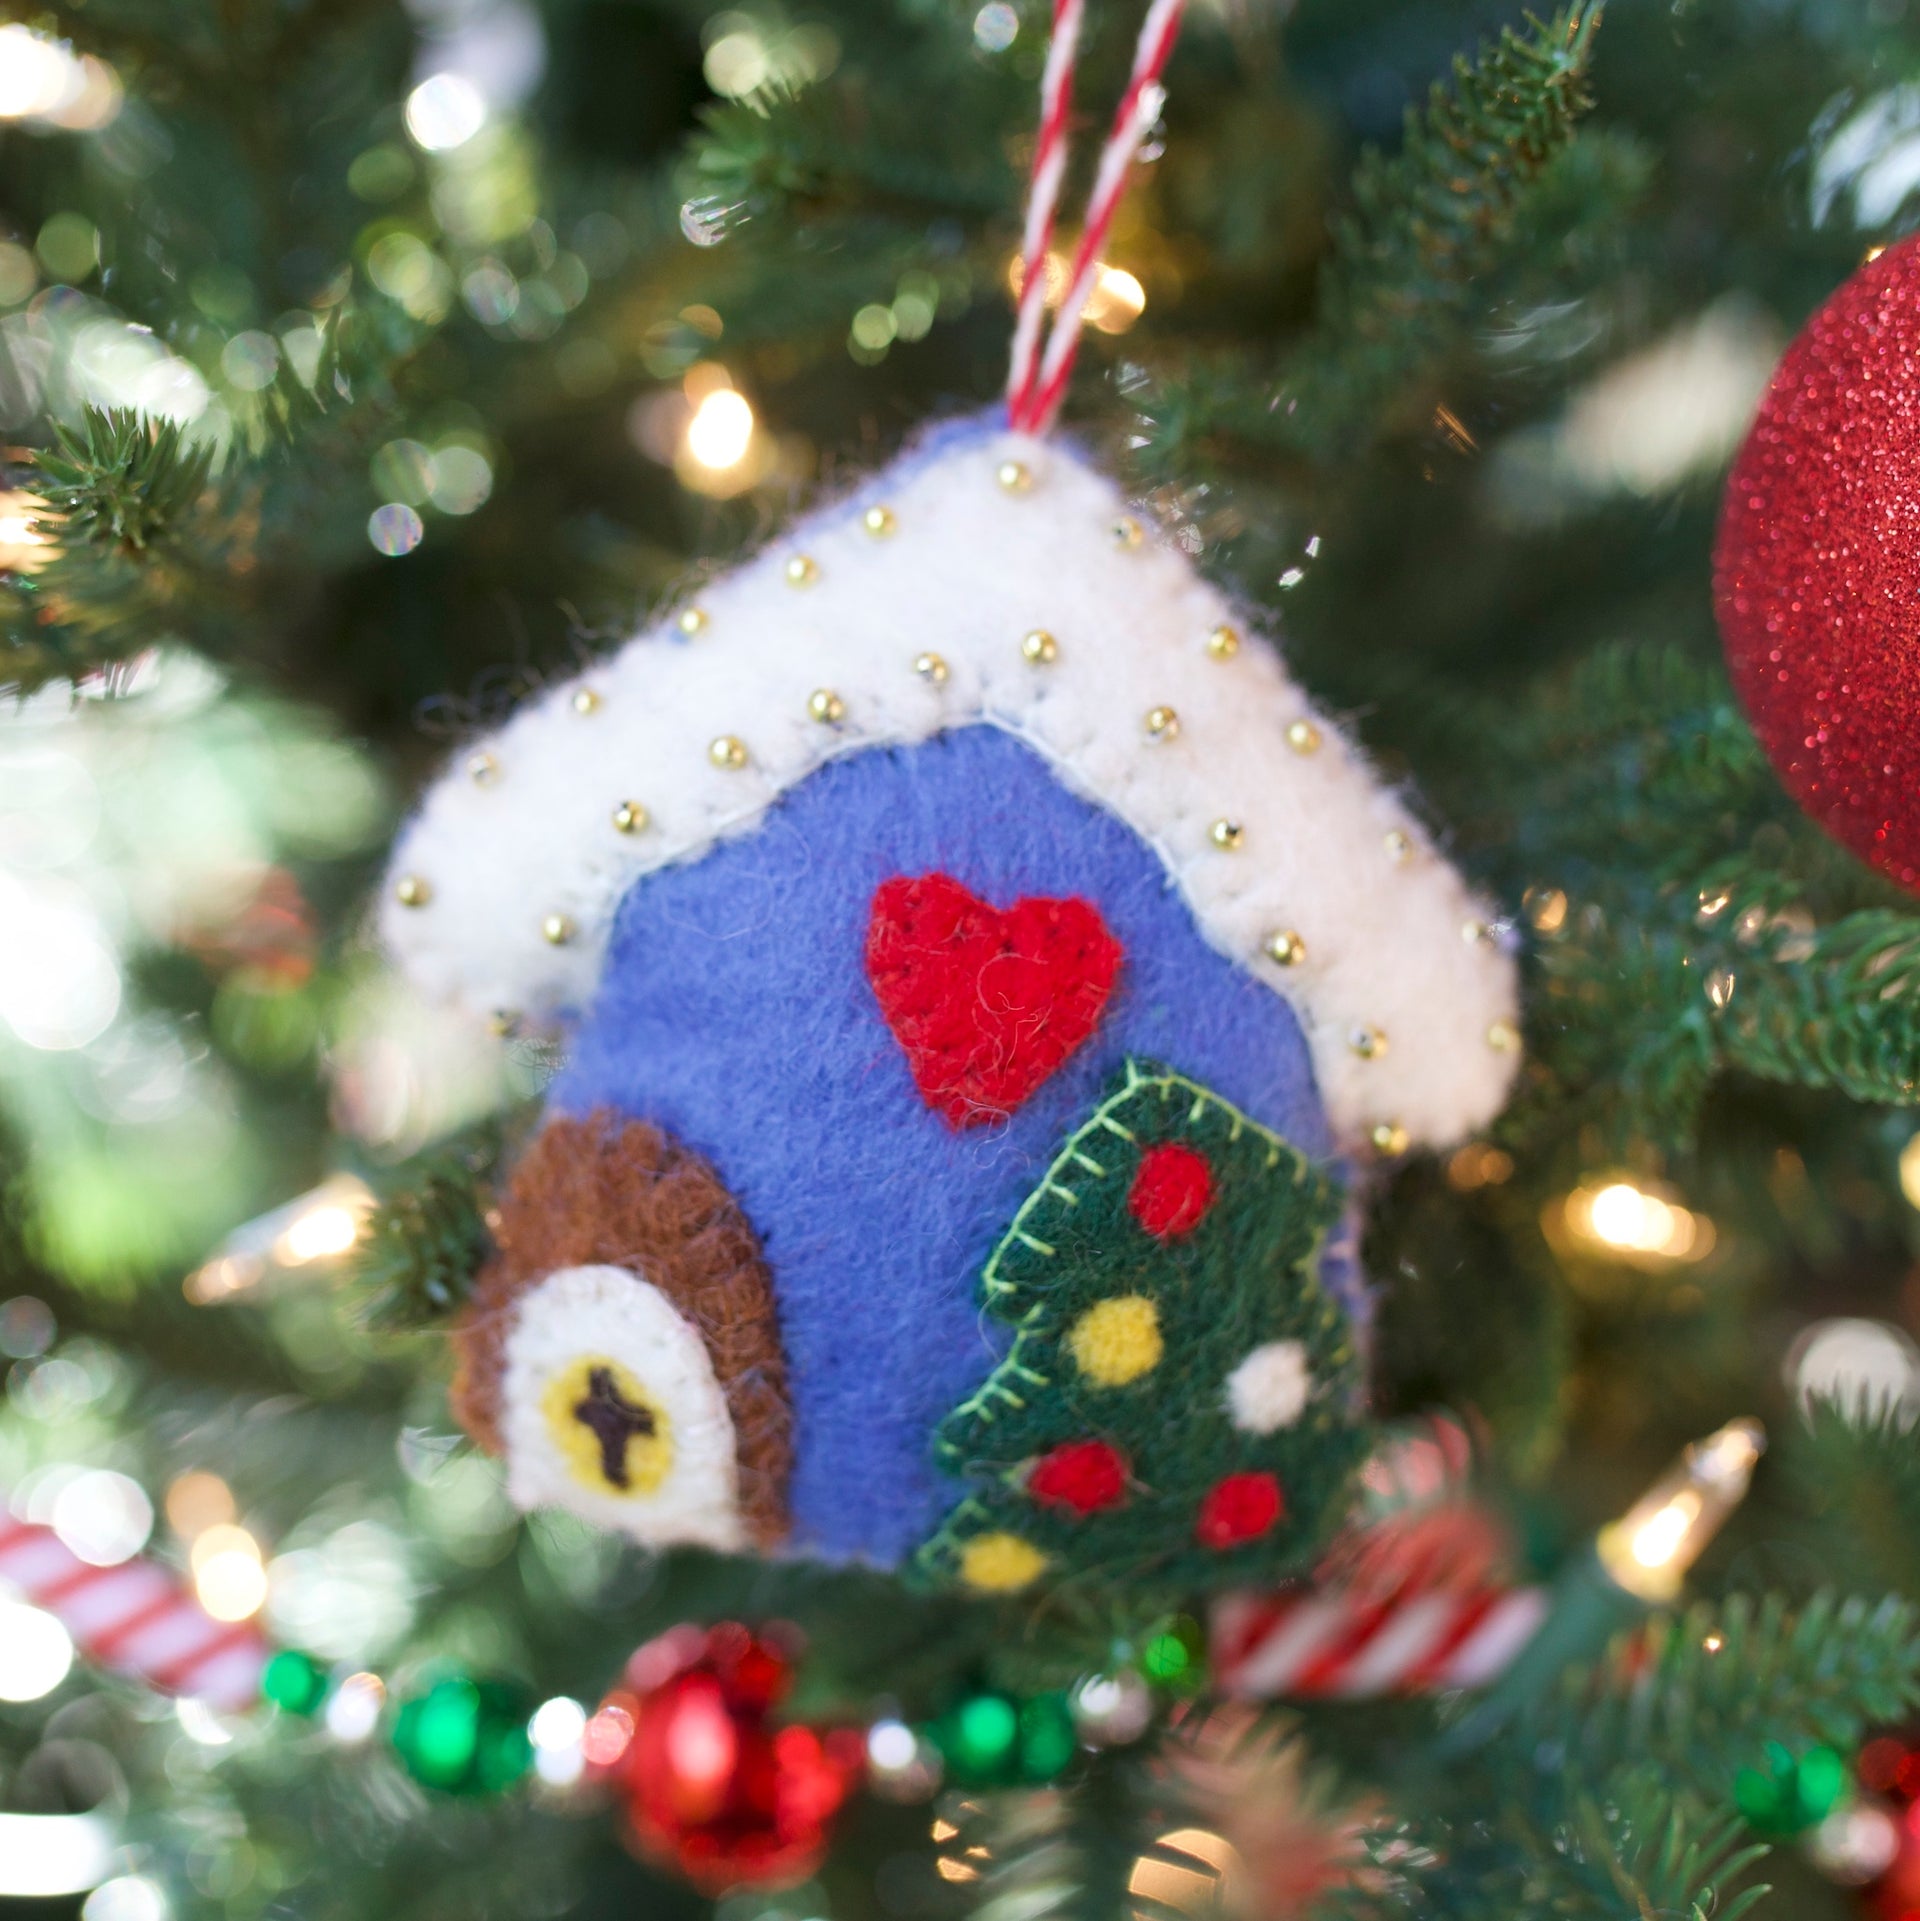 Gingerbread House Ornament, Felt Wool